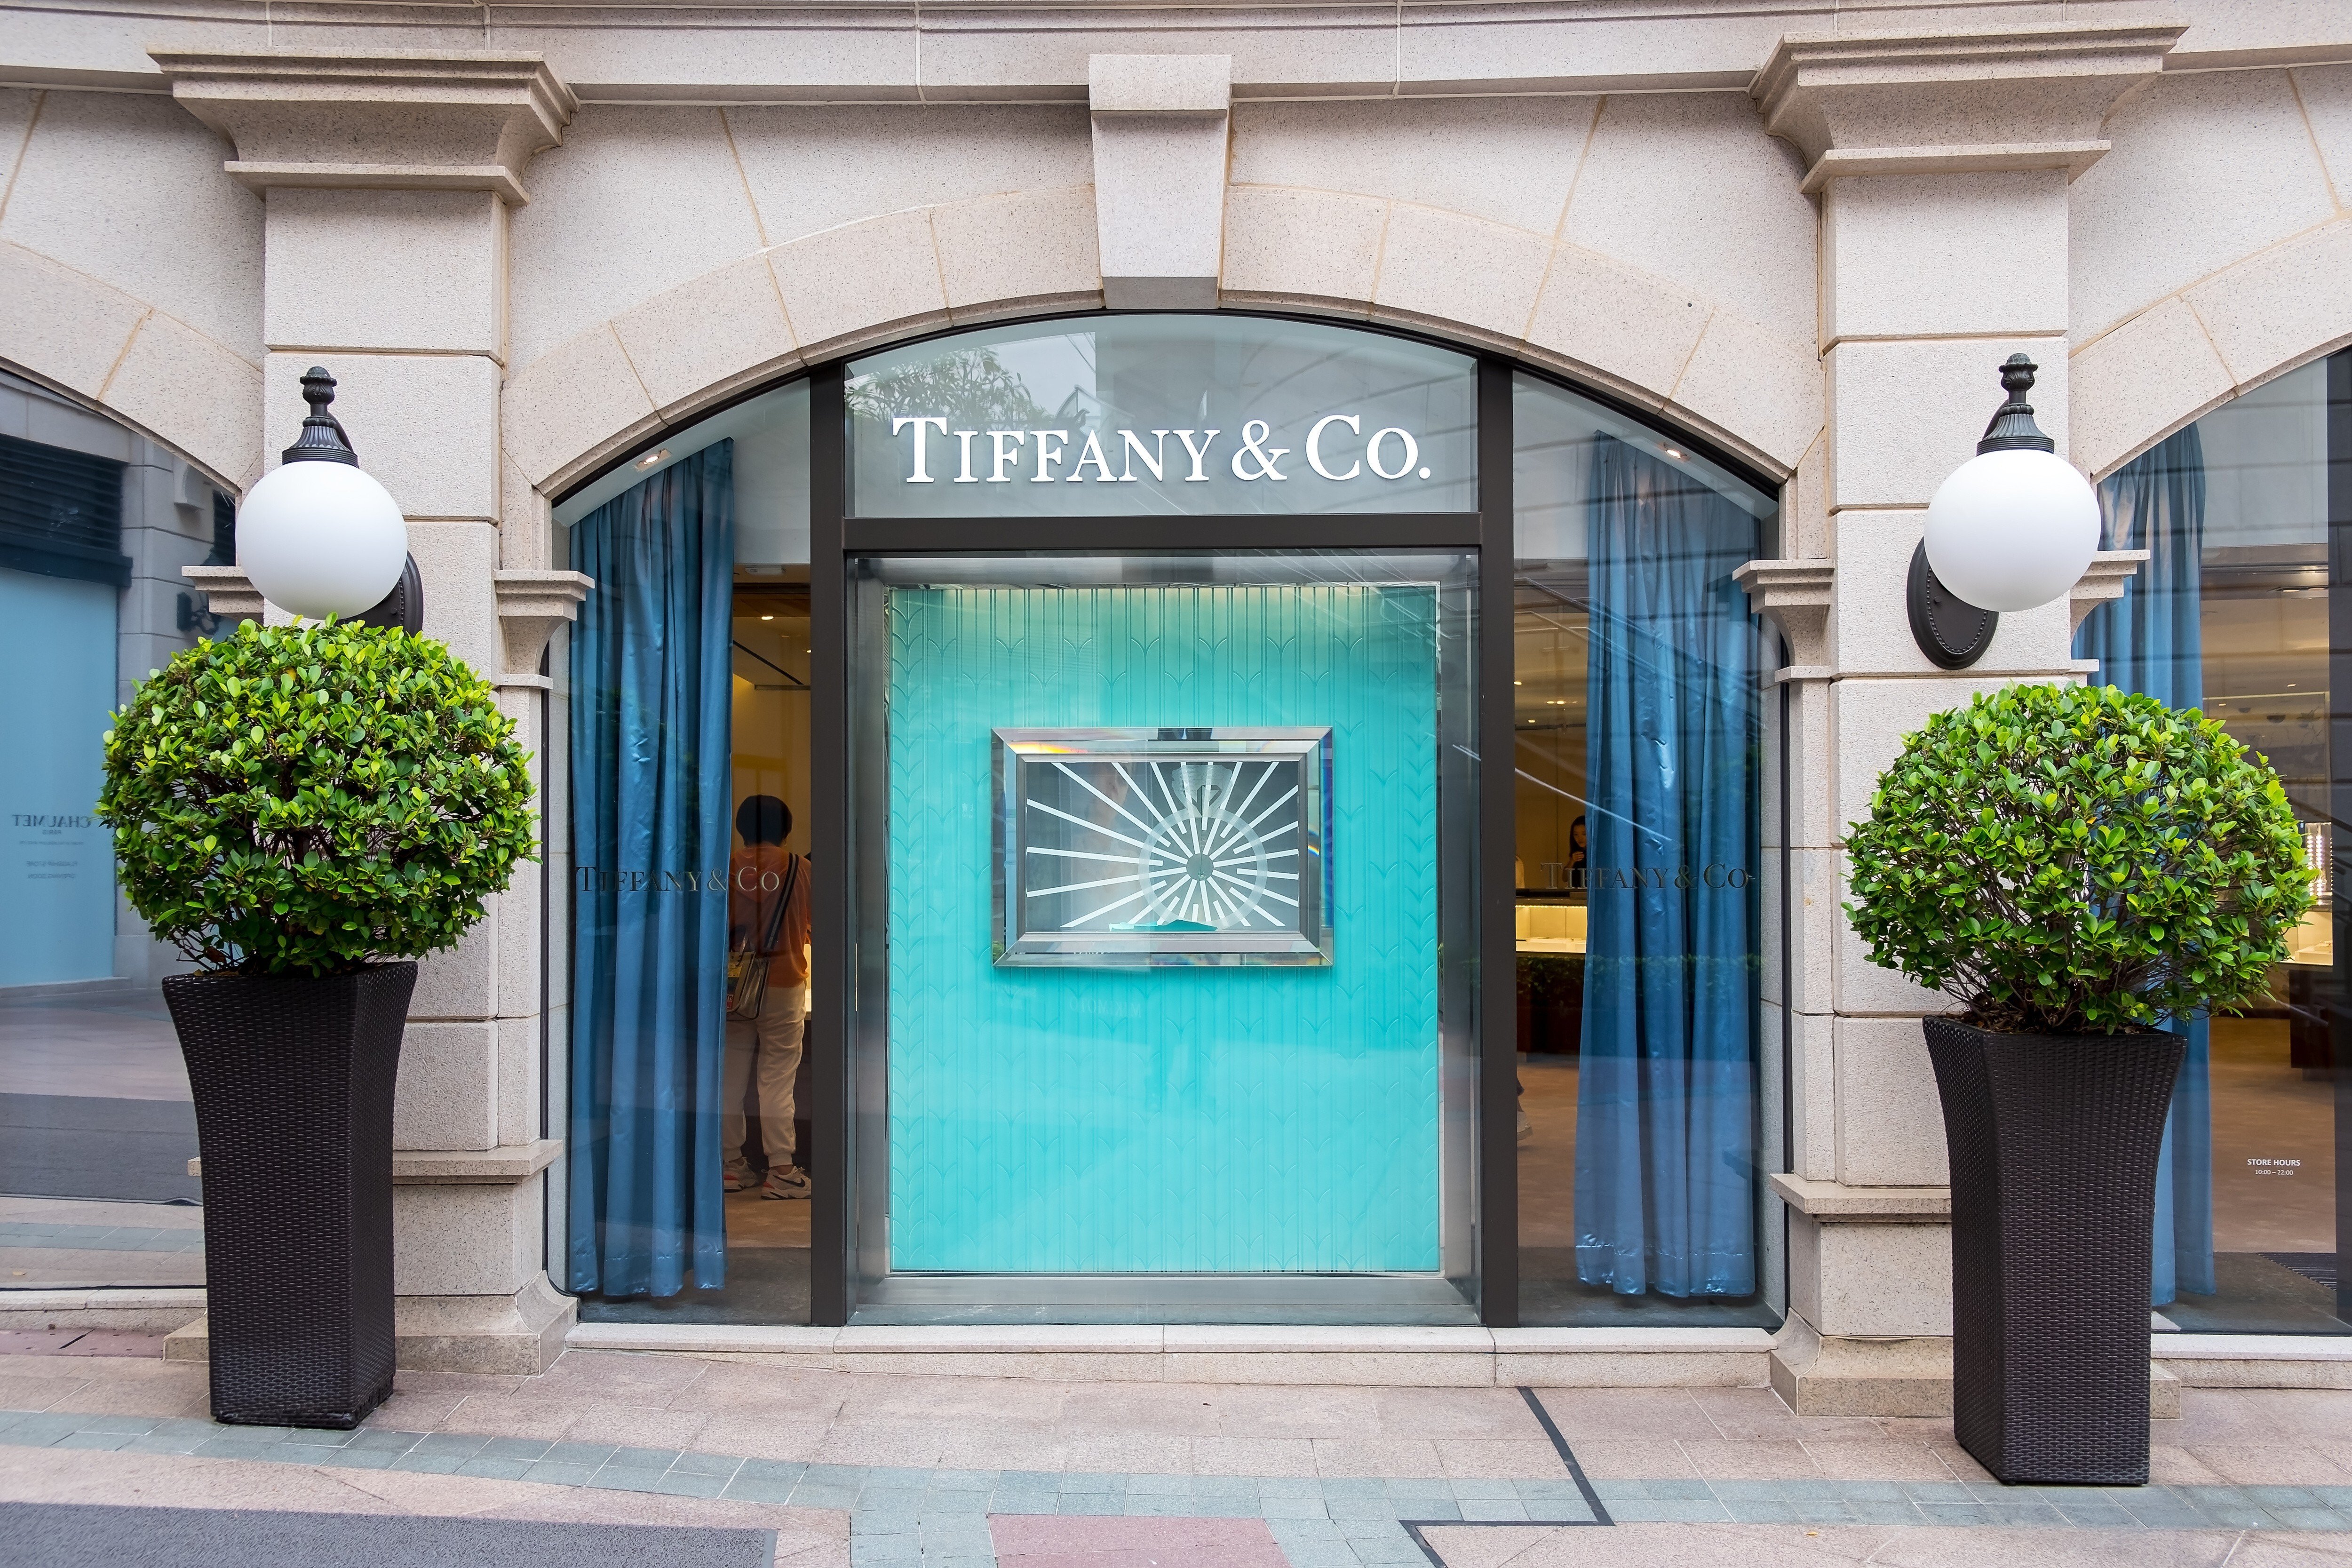 Luxury jeweller Tiffany closed its shop 